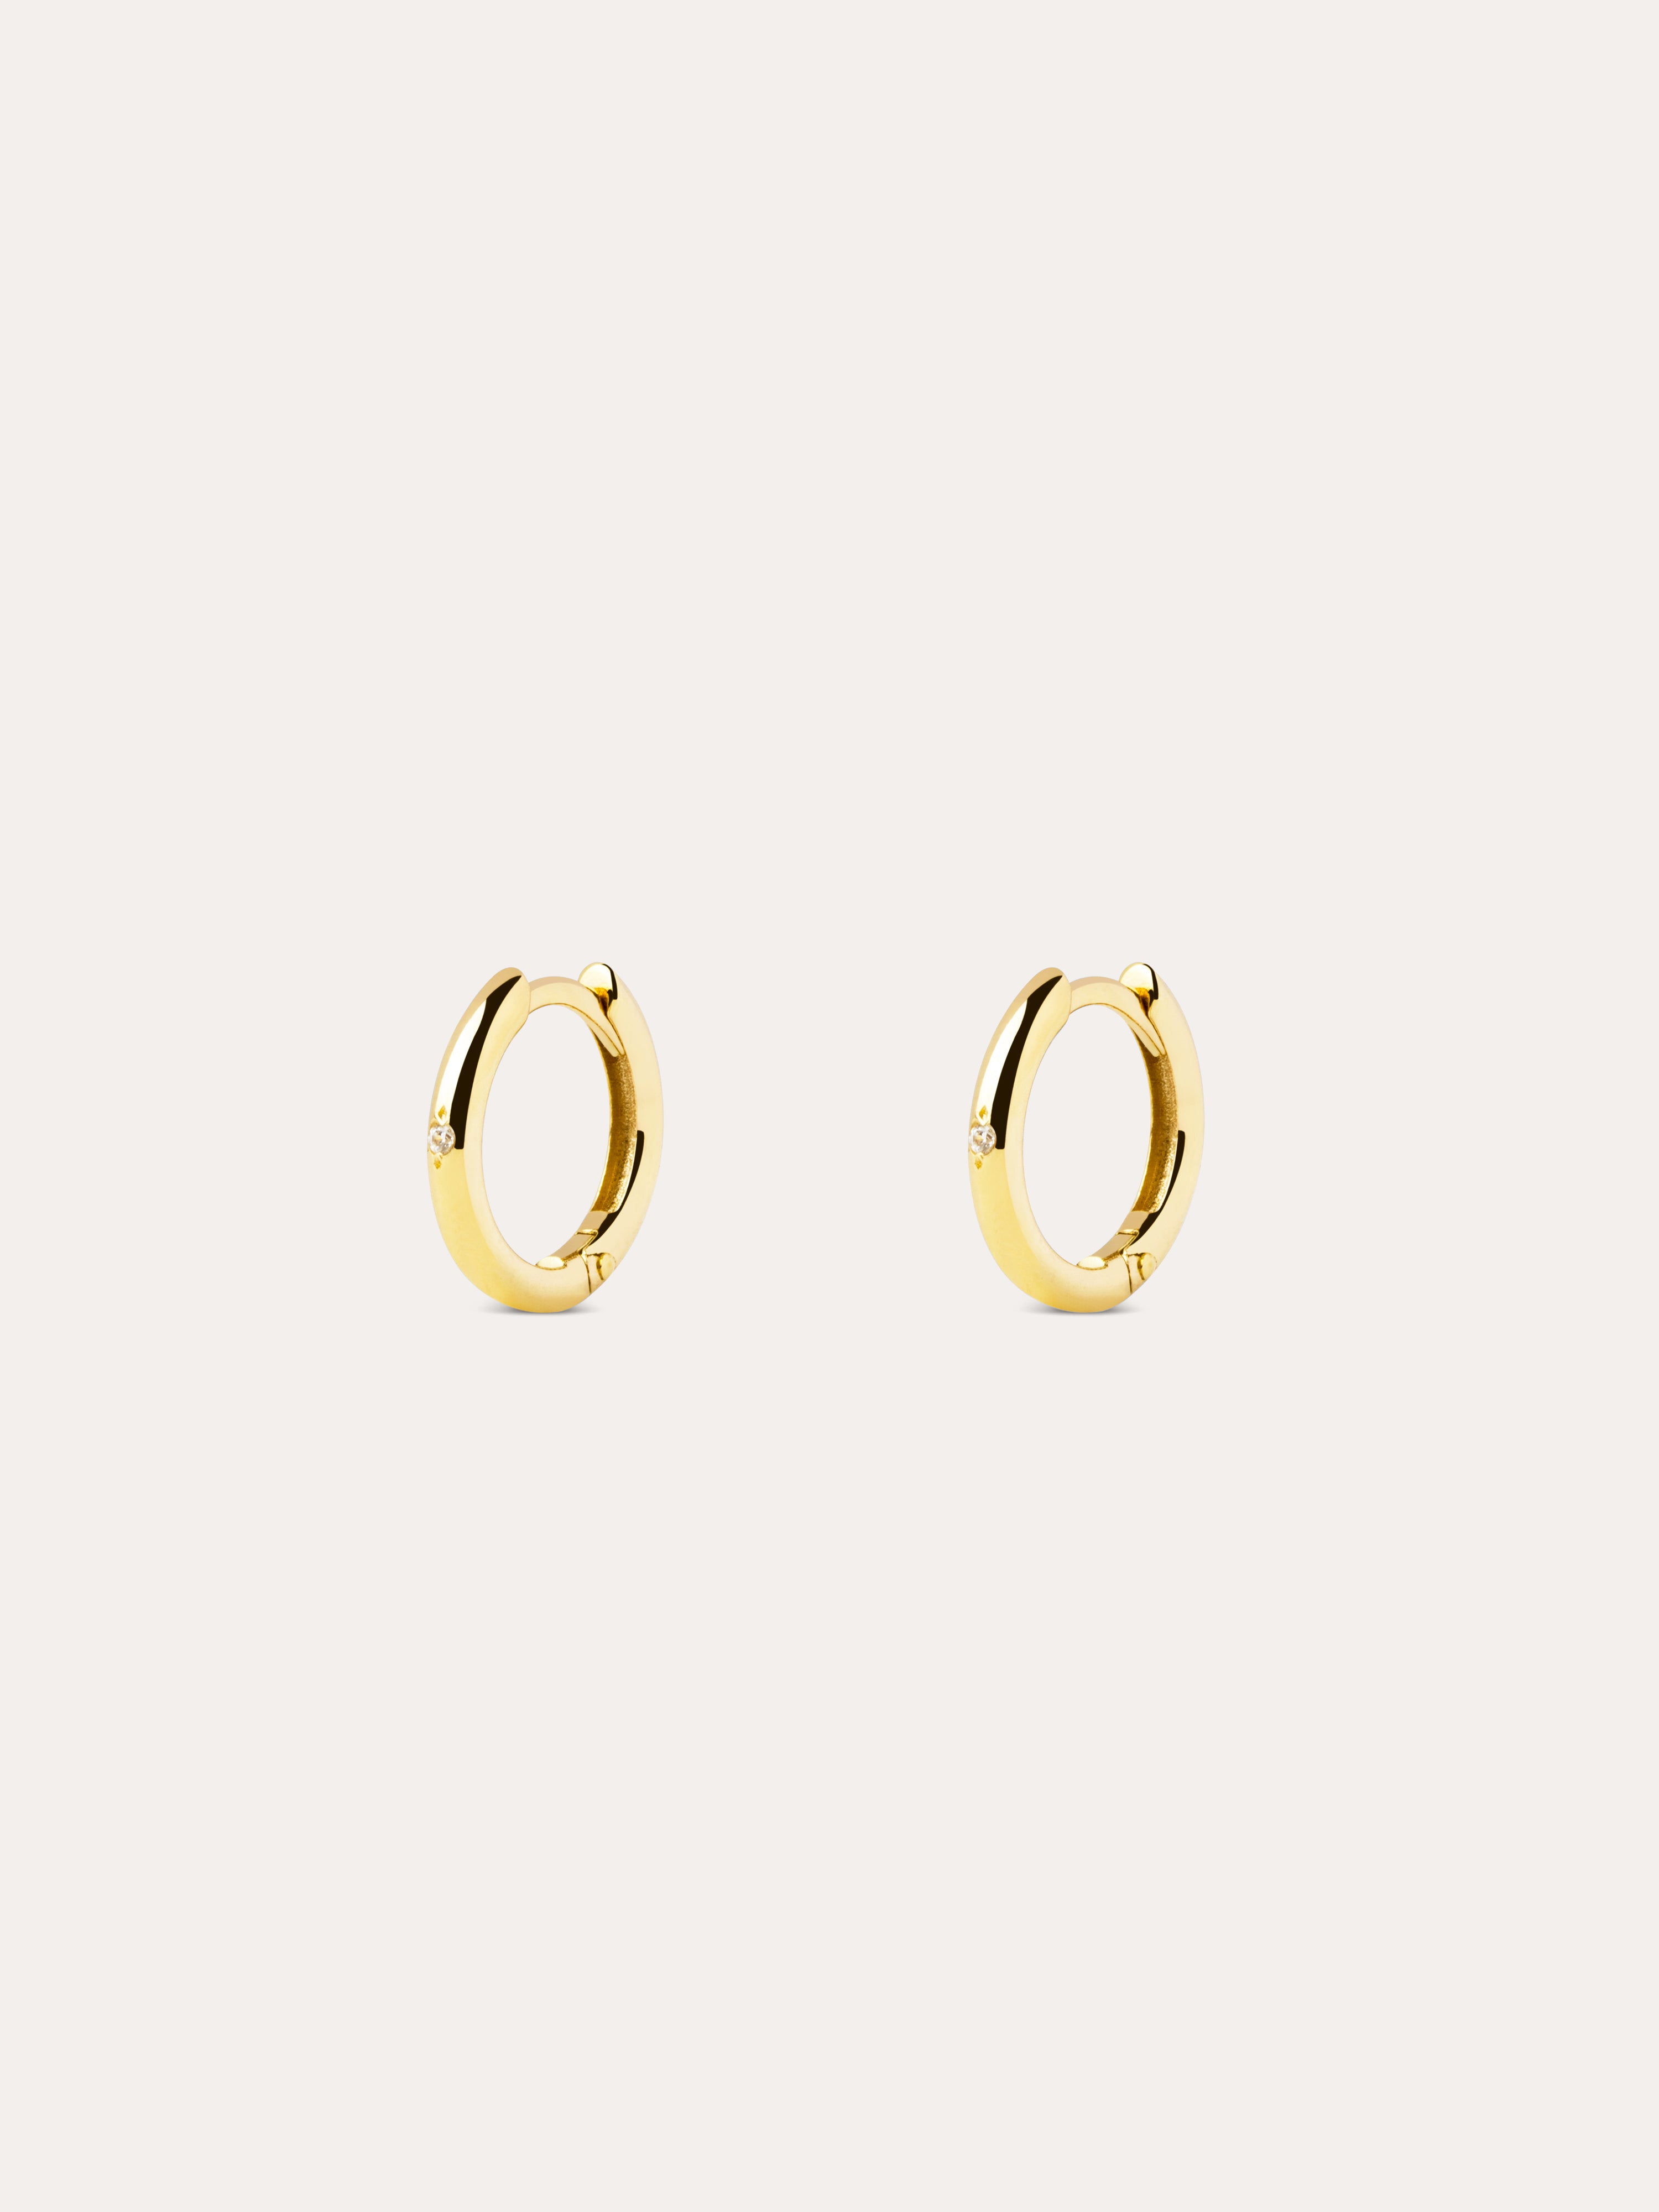 Grace 9k Yellow Gold Hoop Earrings with White Topaz